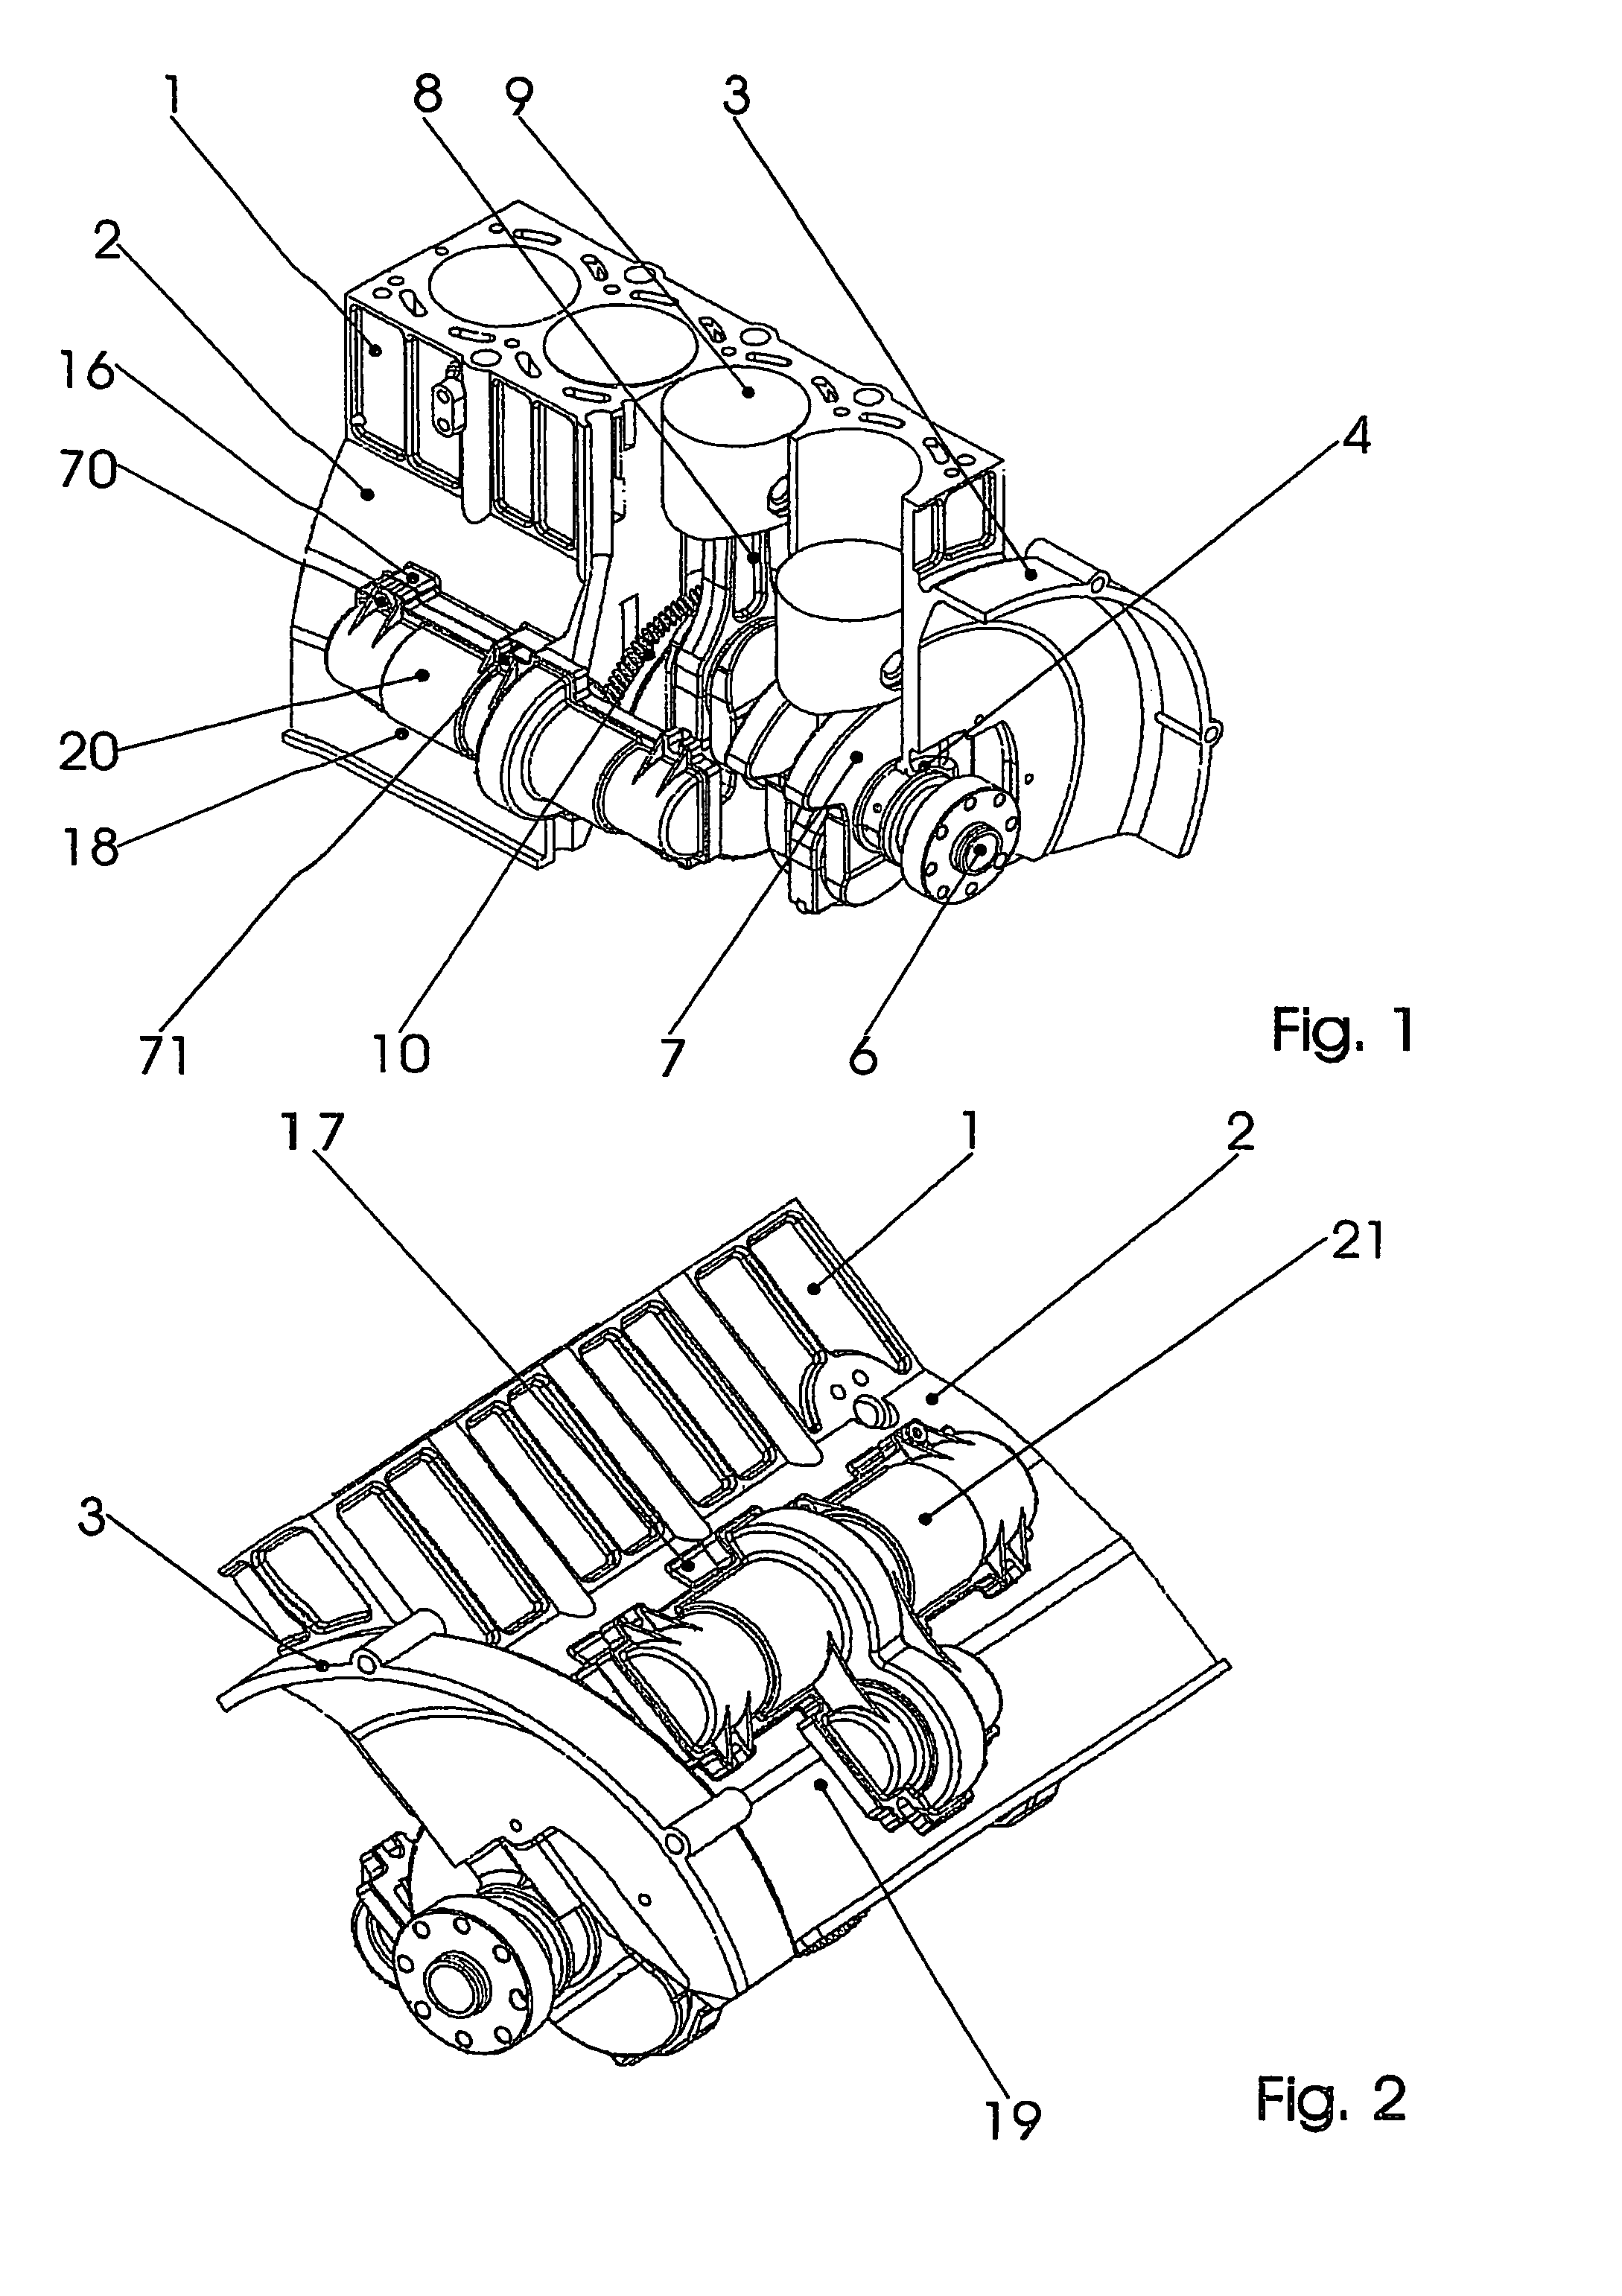 Piston engine with integrated balance shafts